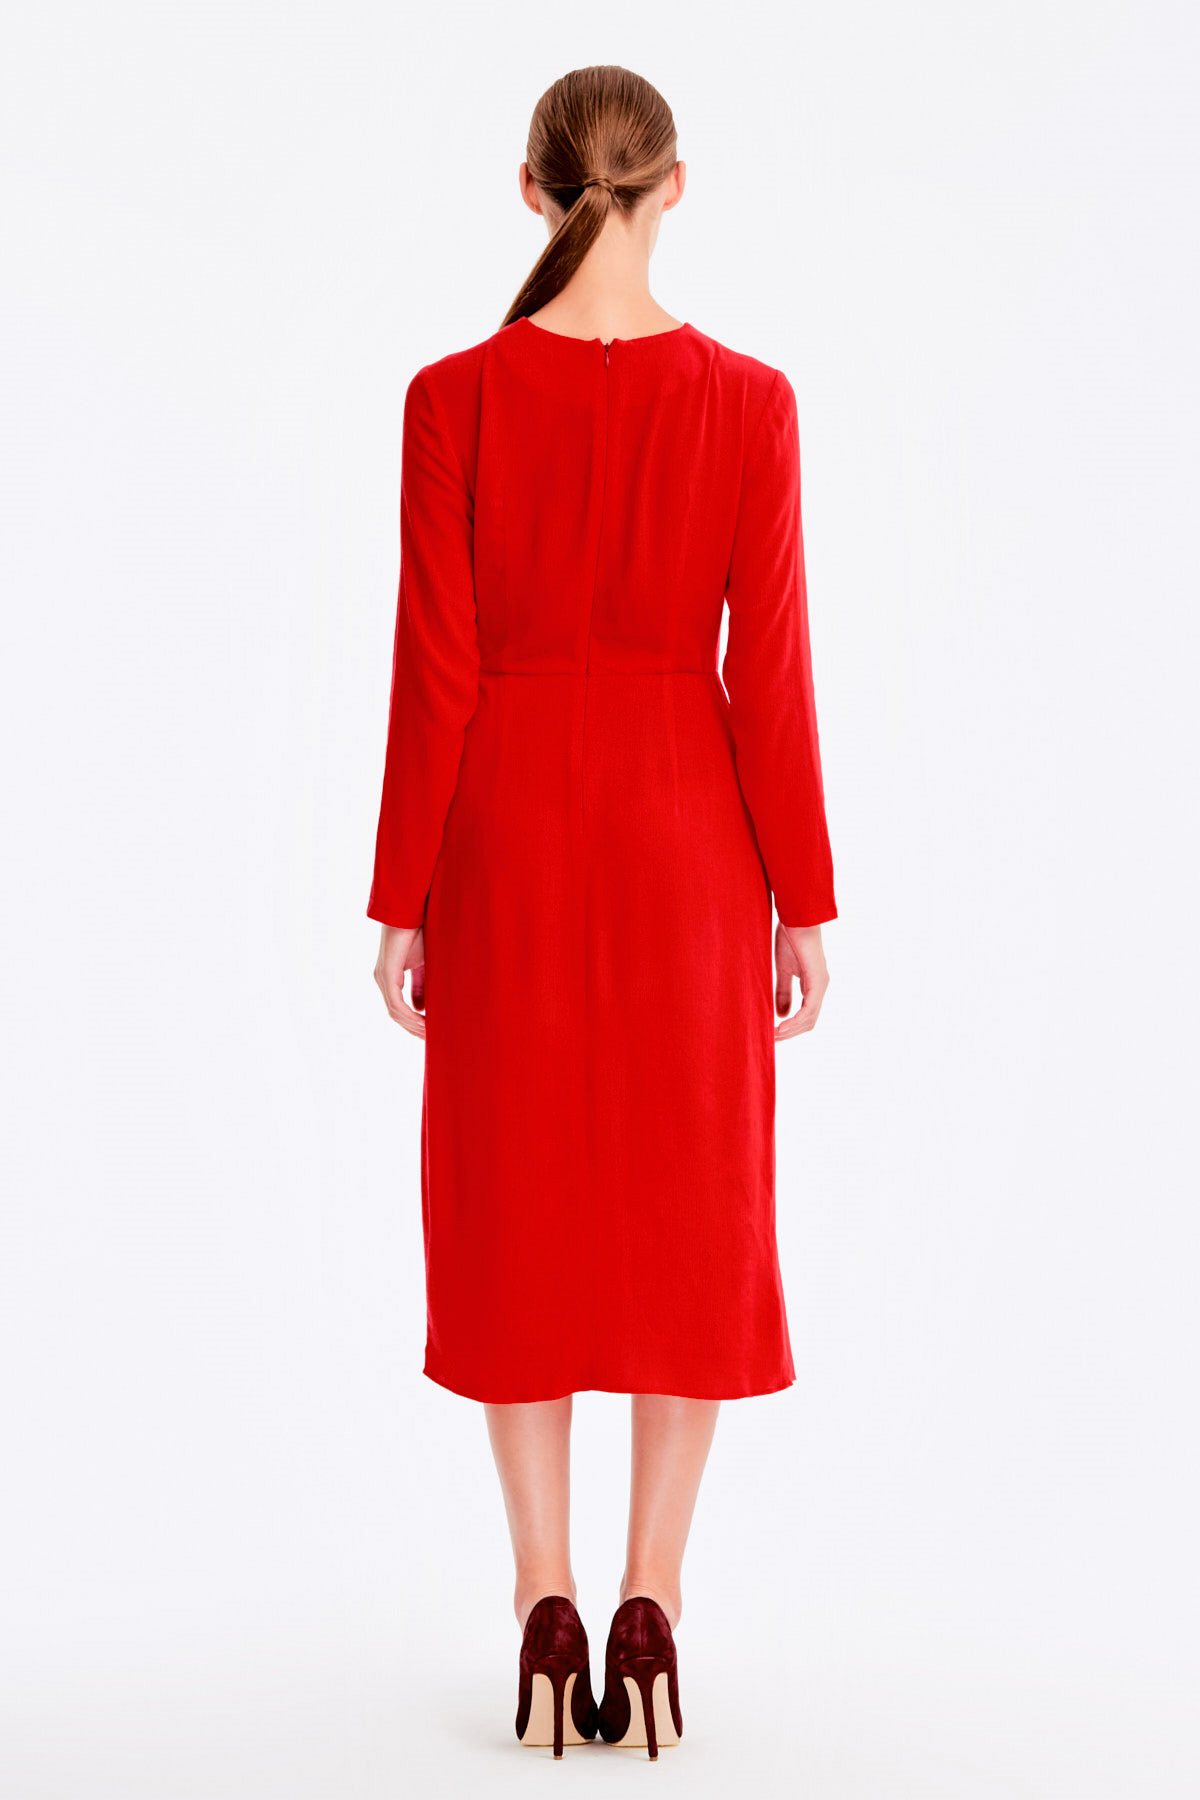 Midi red dress , photo 6